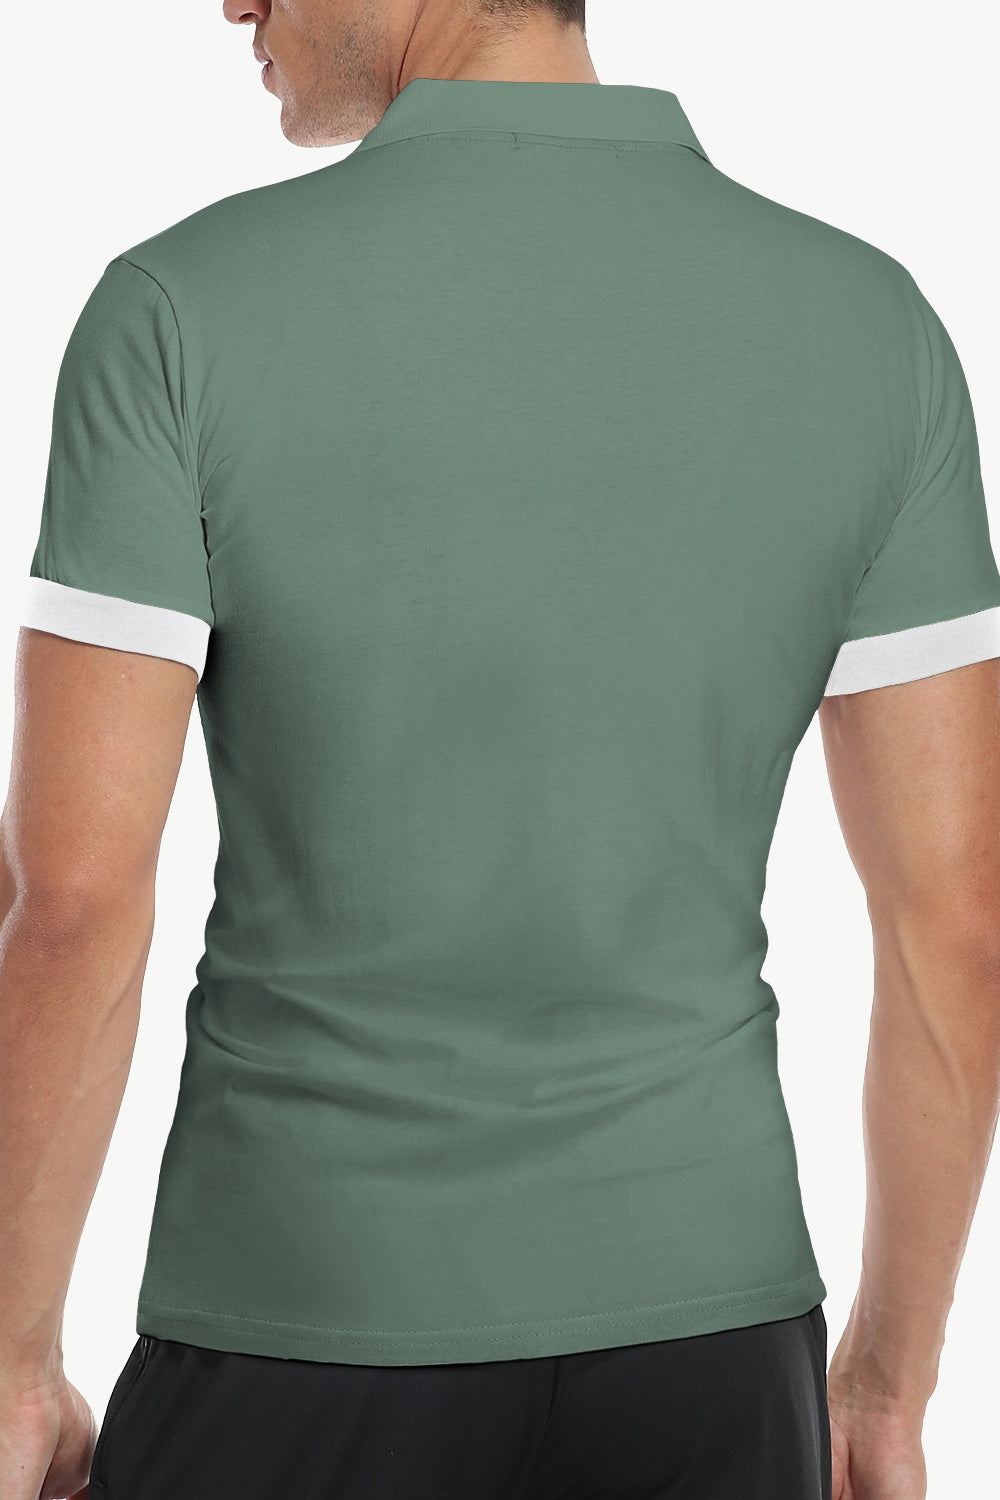 Contrast Short Sleeve Polo Shirt